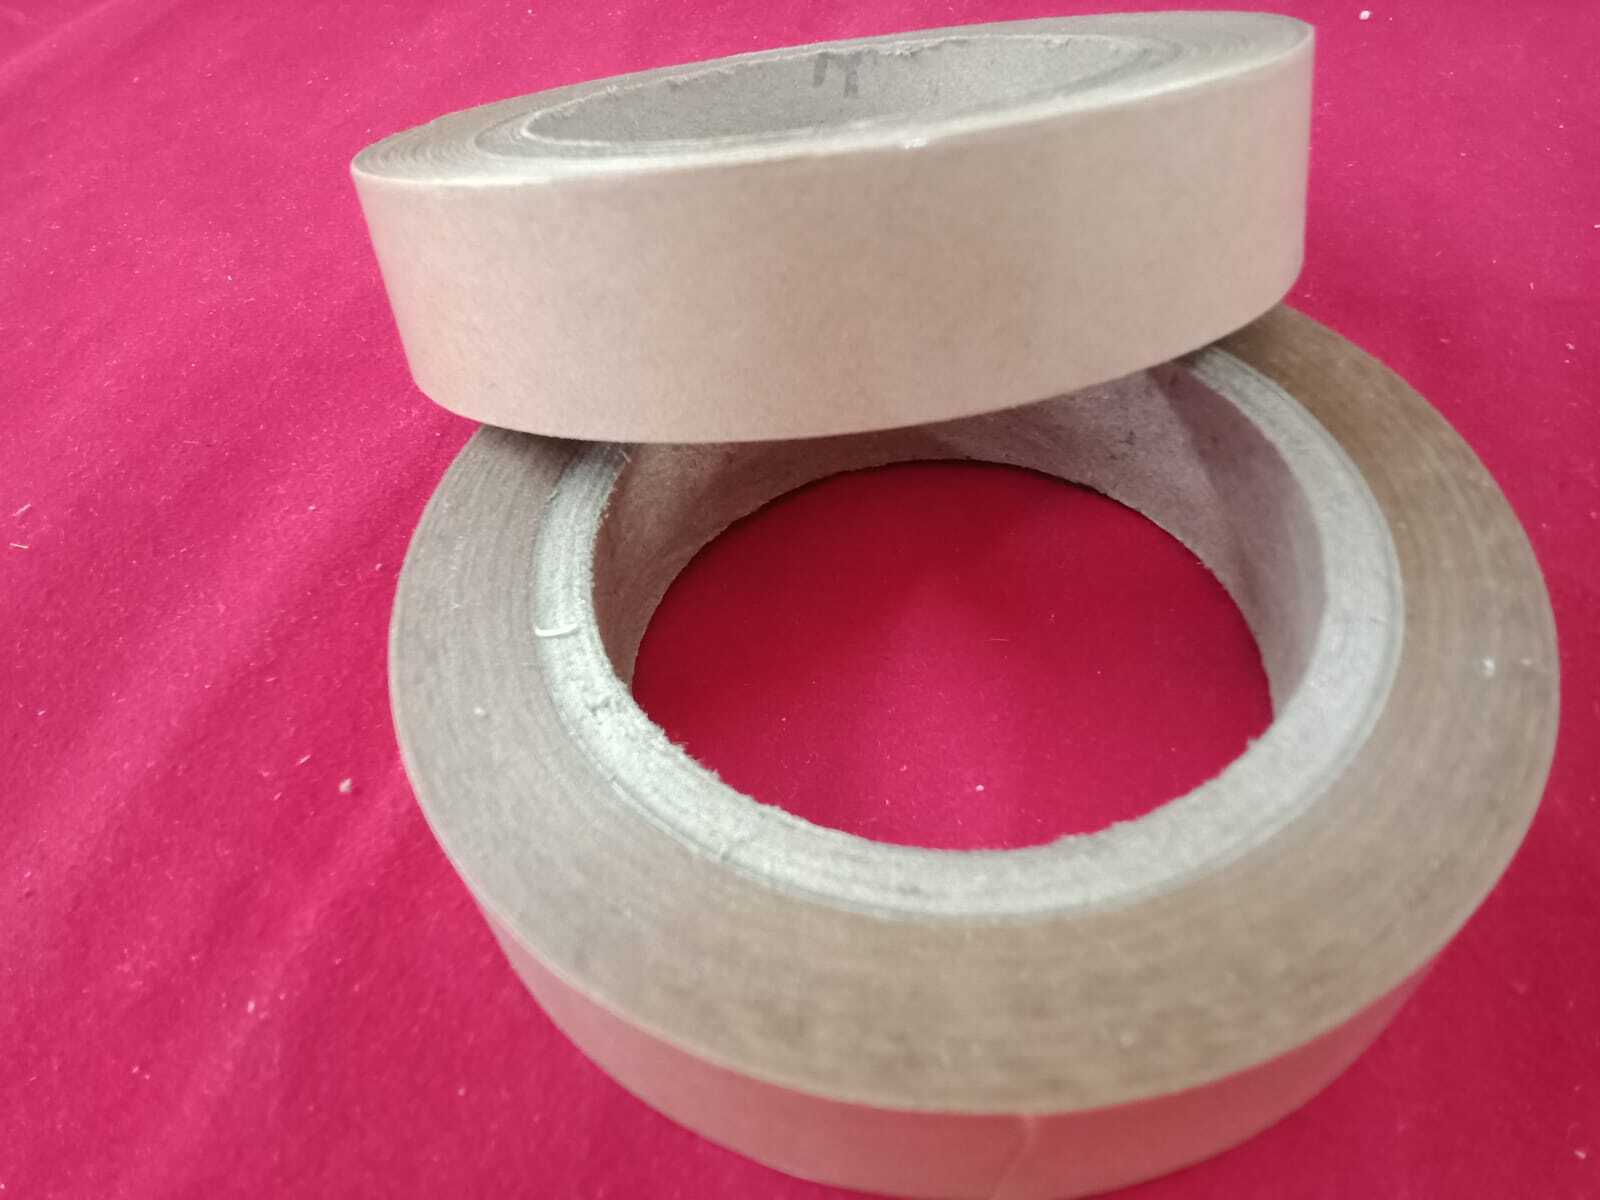 Brown paper hotmelt adhesive tape